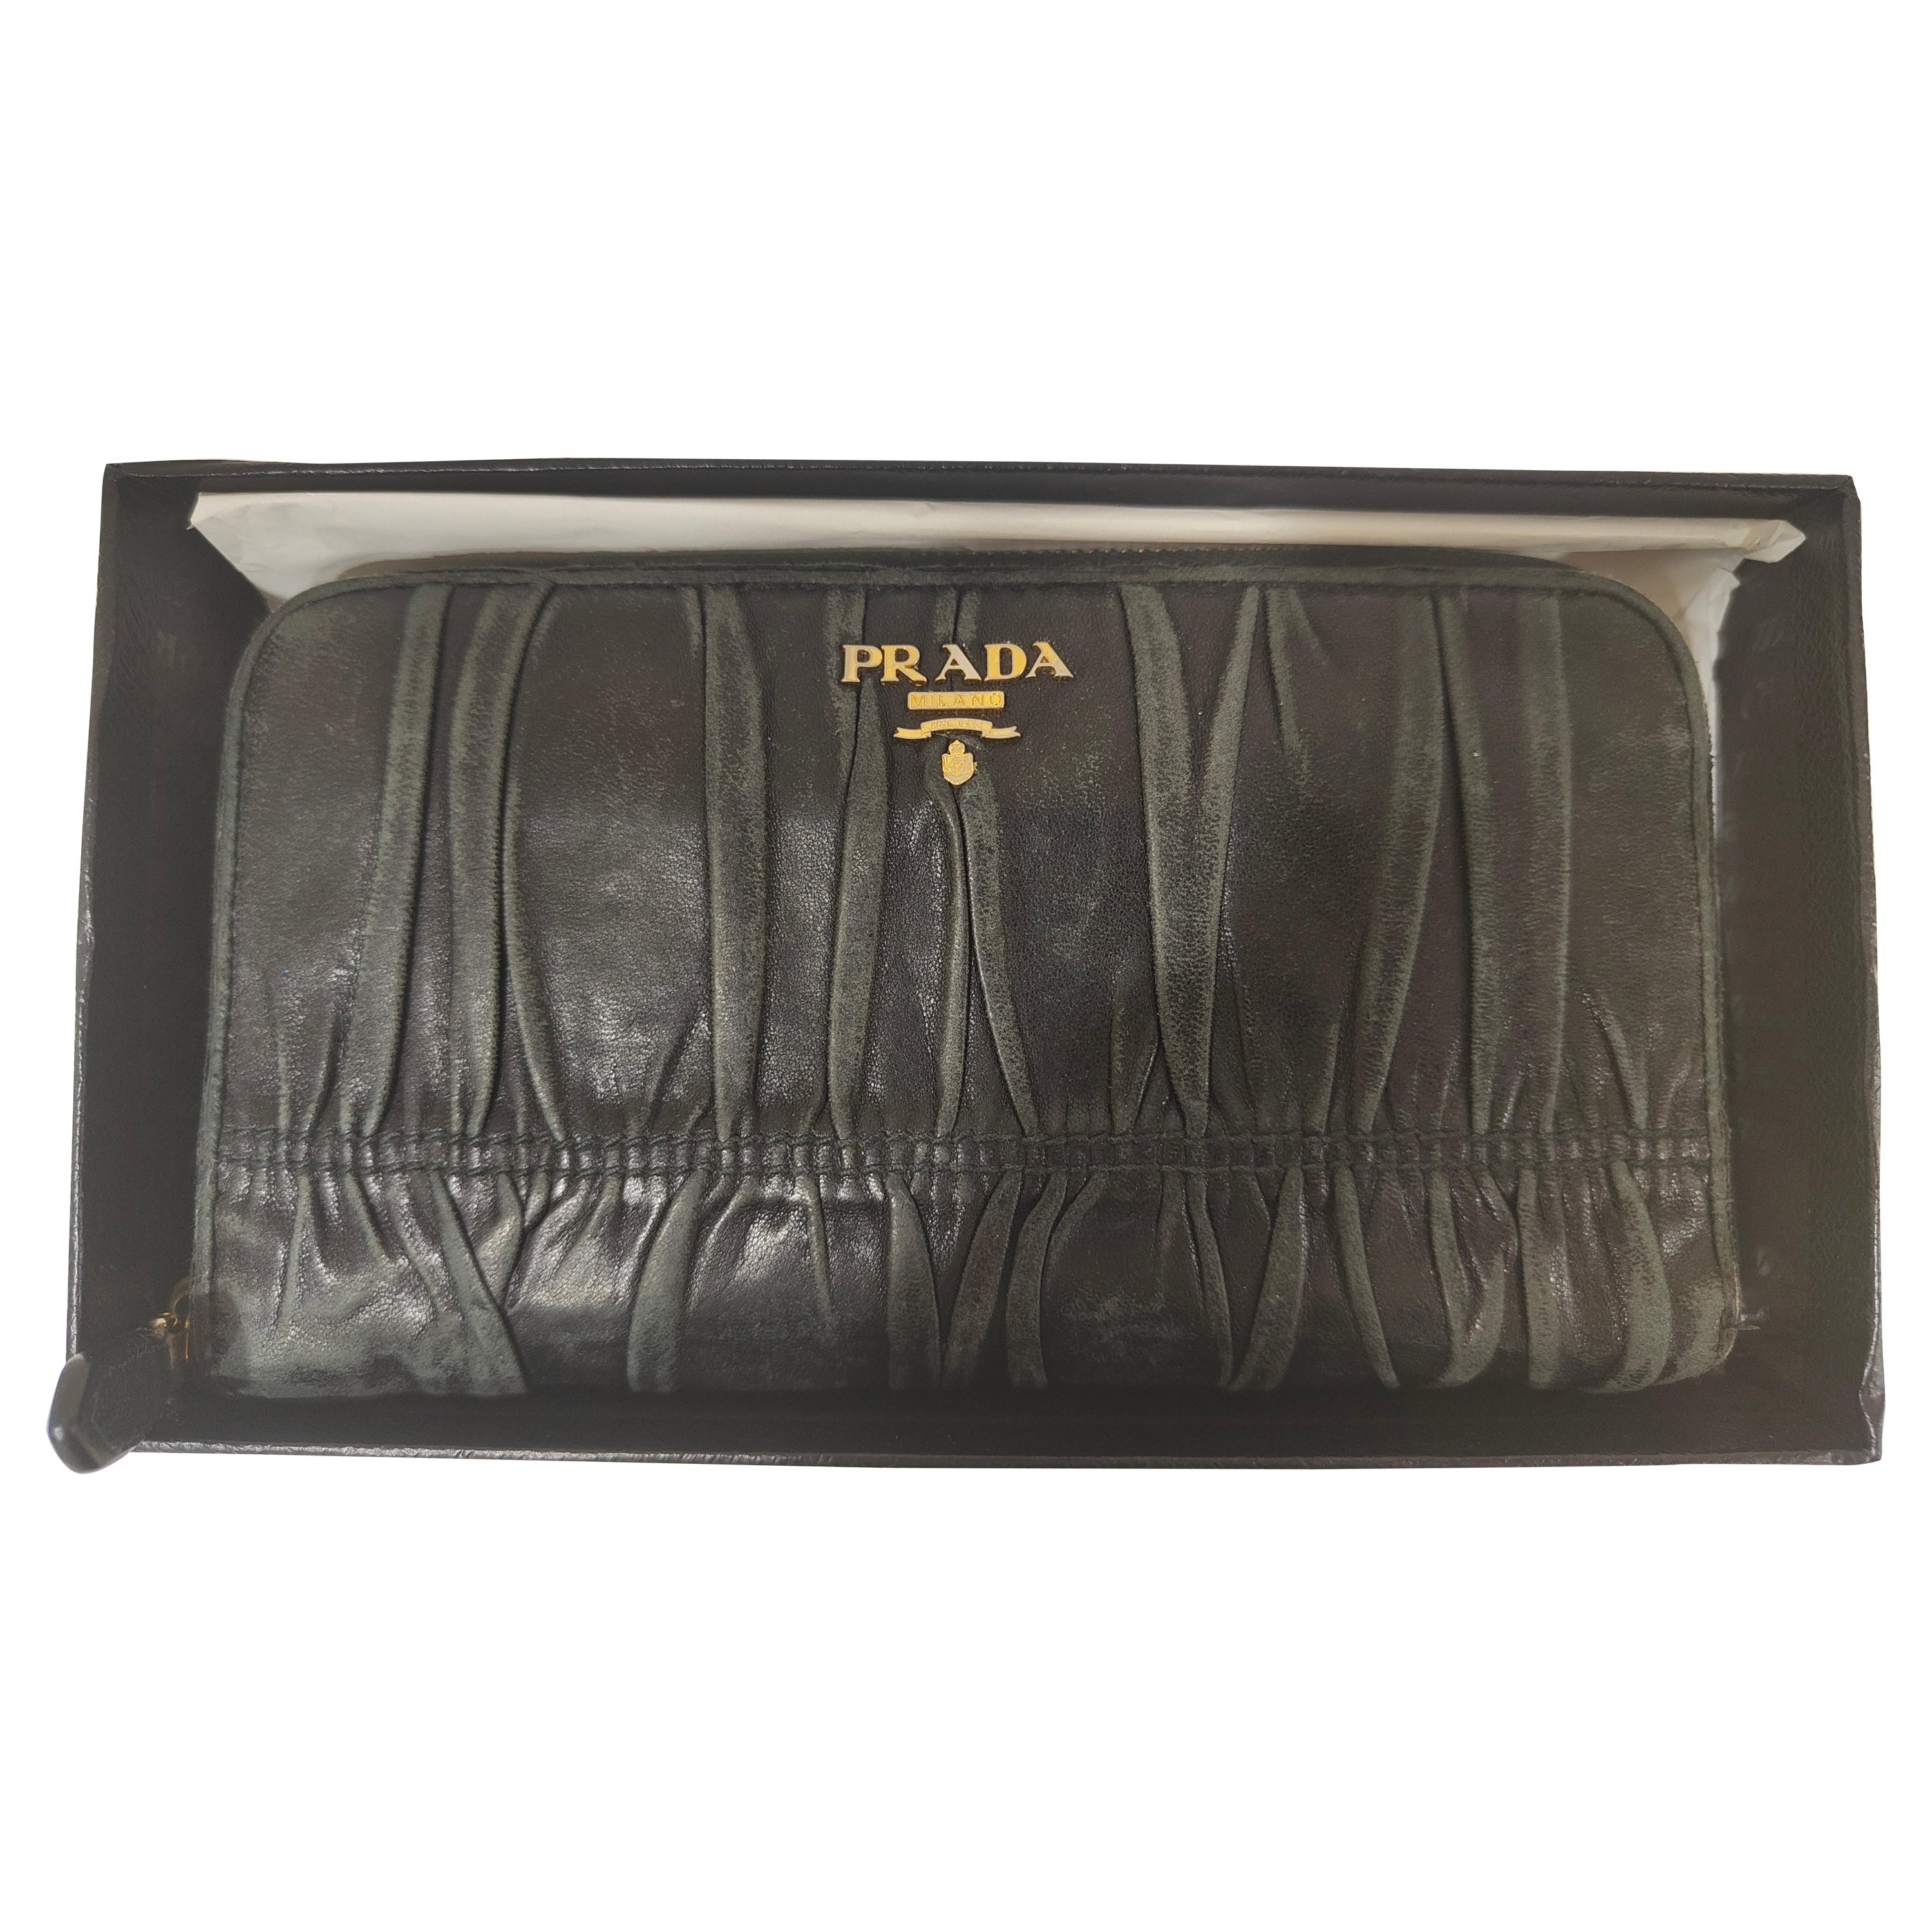 Prada black leather wallet